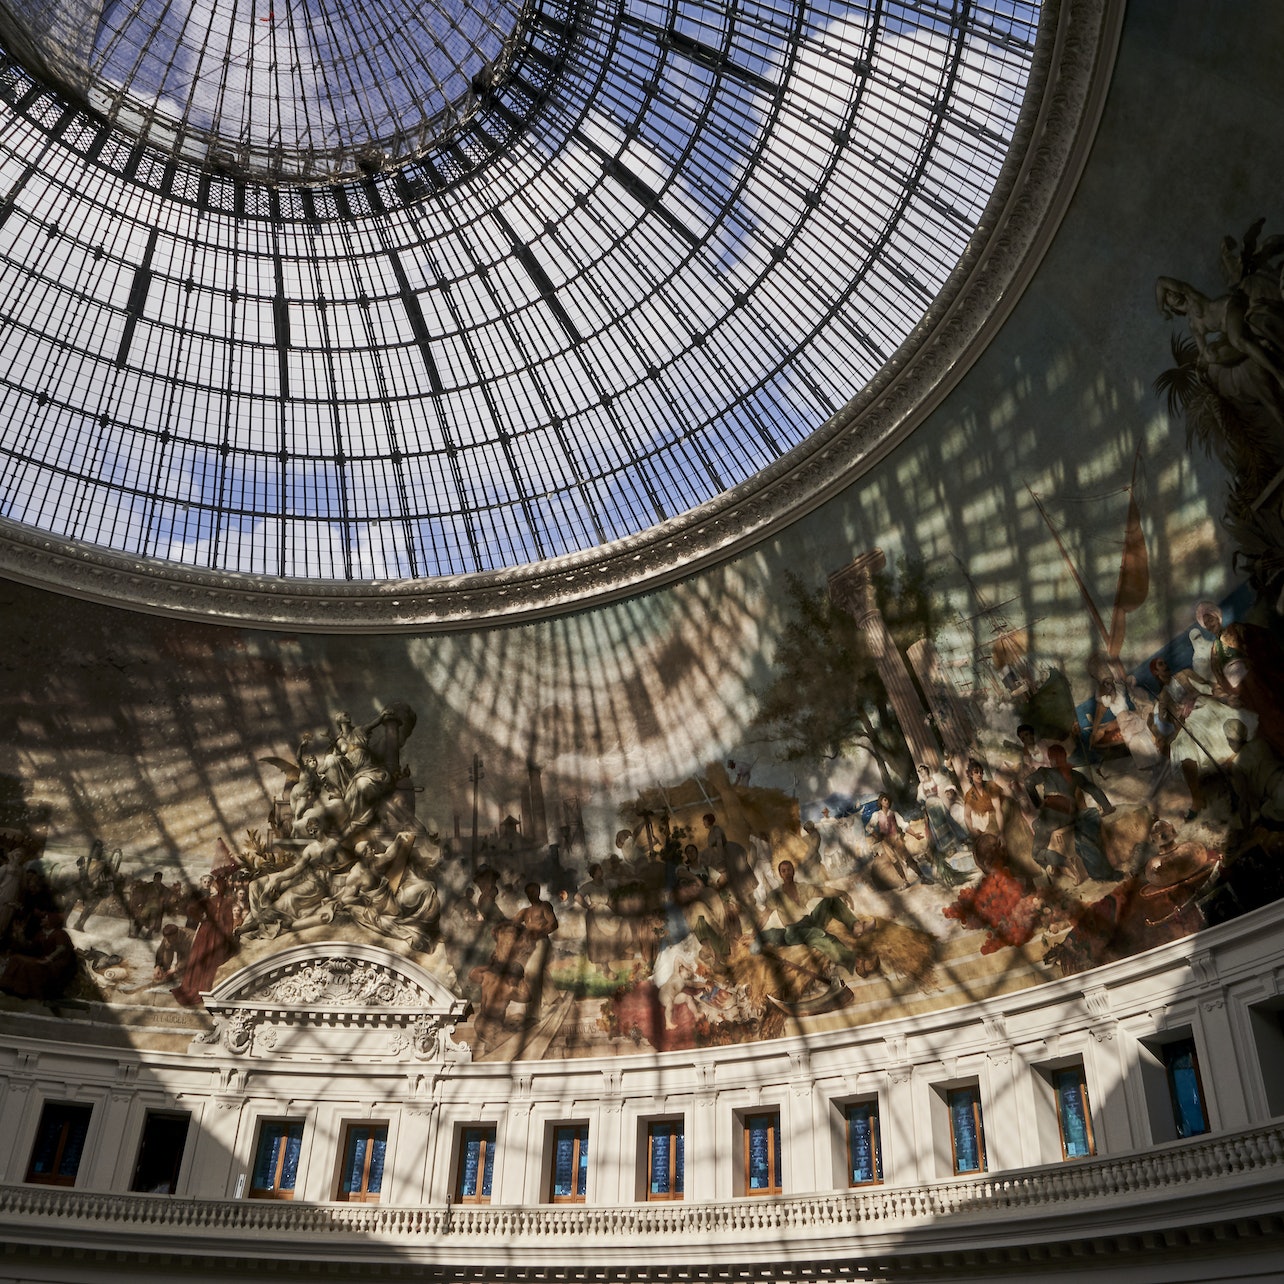 Picture of Bourse de Commerce - Pinault Collection in Paris, France